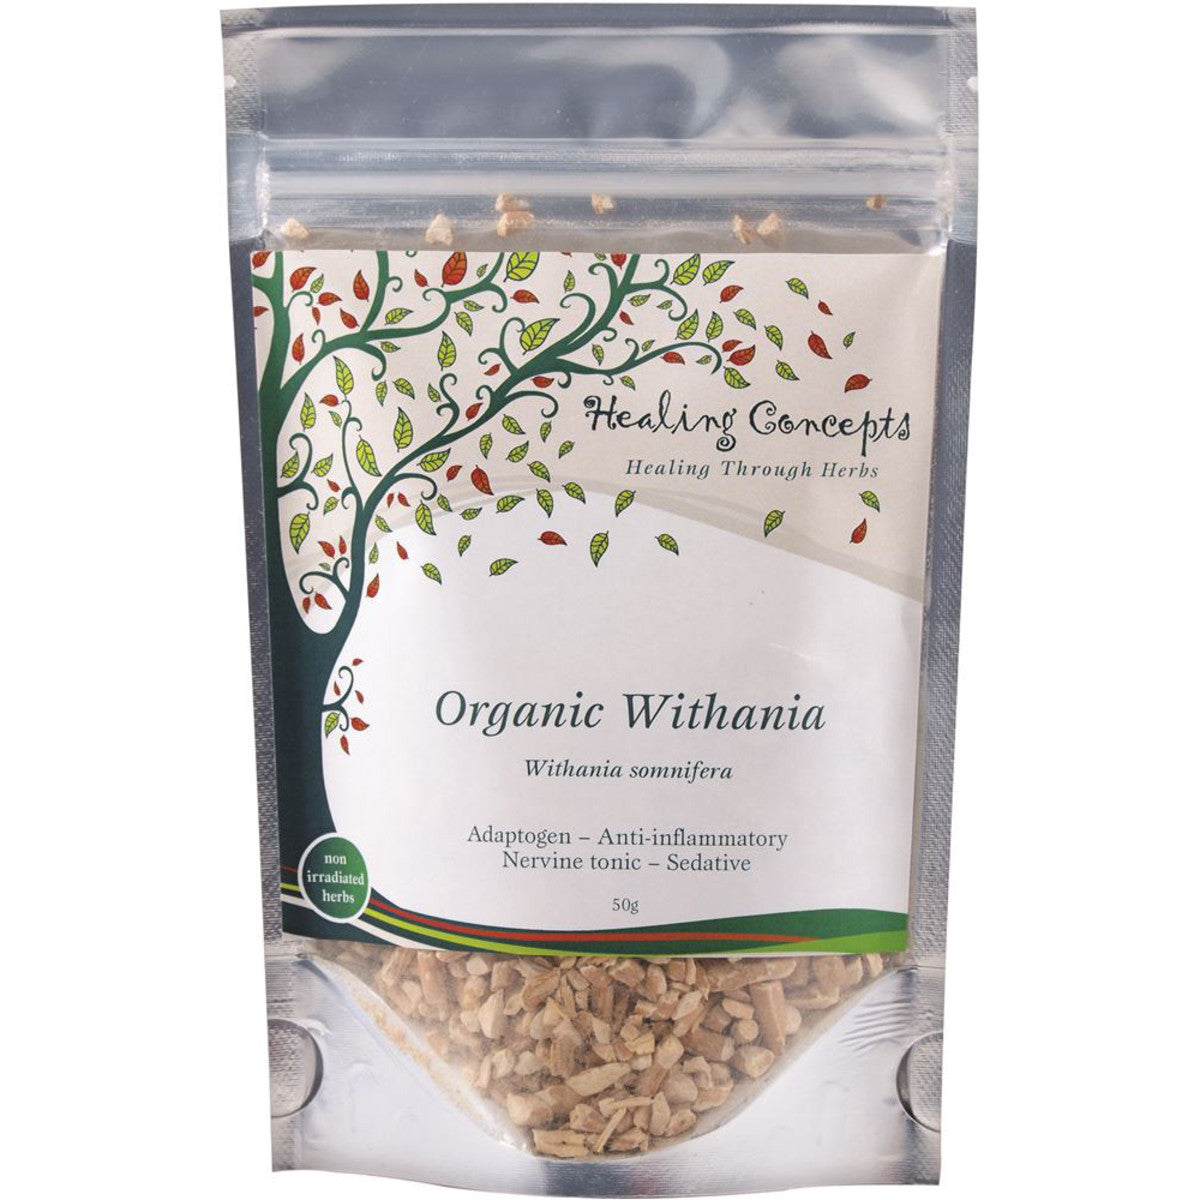 Healing Concepts Withania Tea 50g, Organic